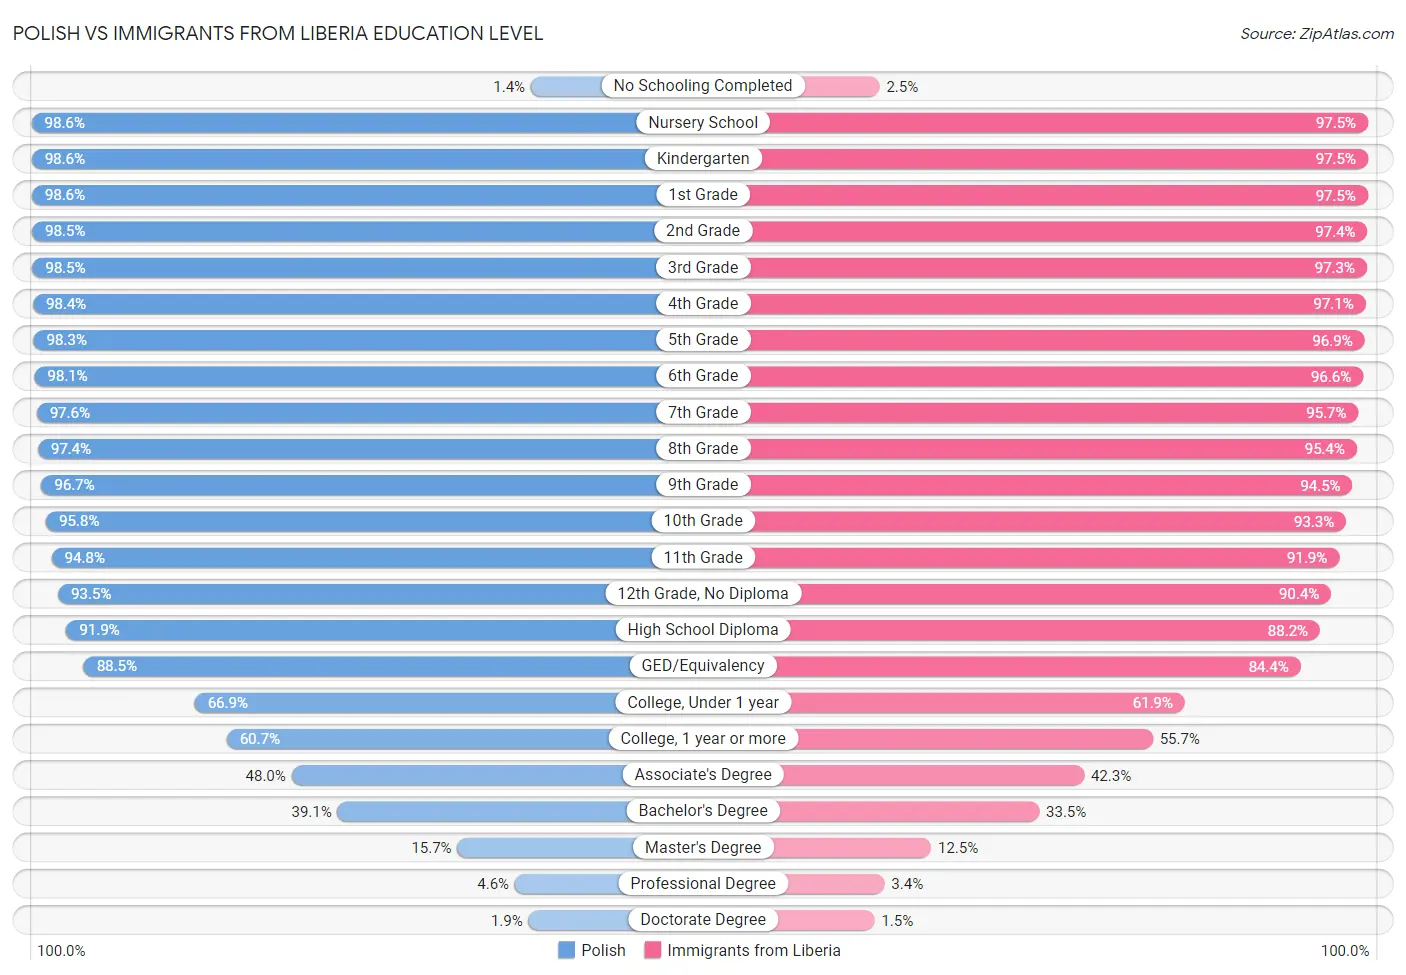 Polish vs Immigrants from Liberia Education Level